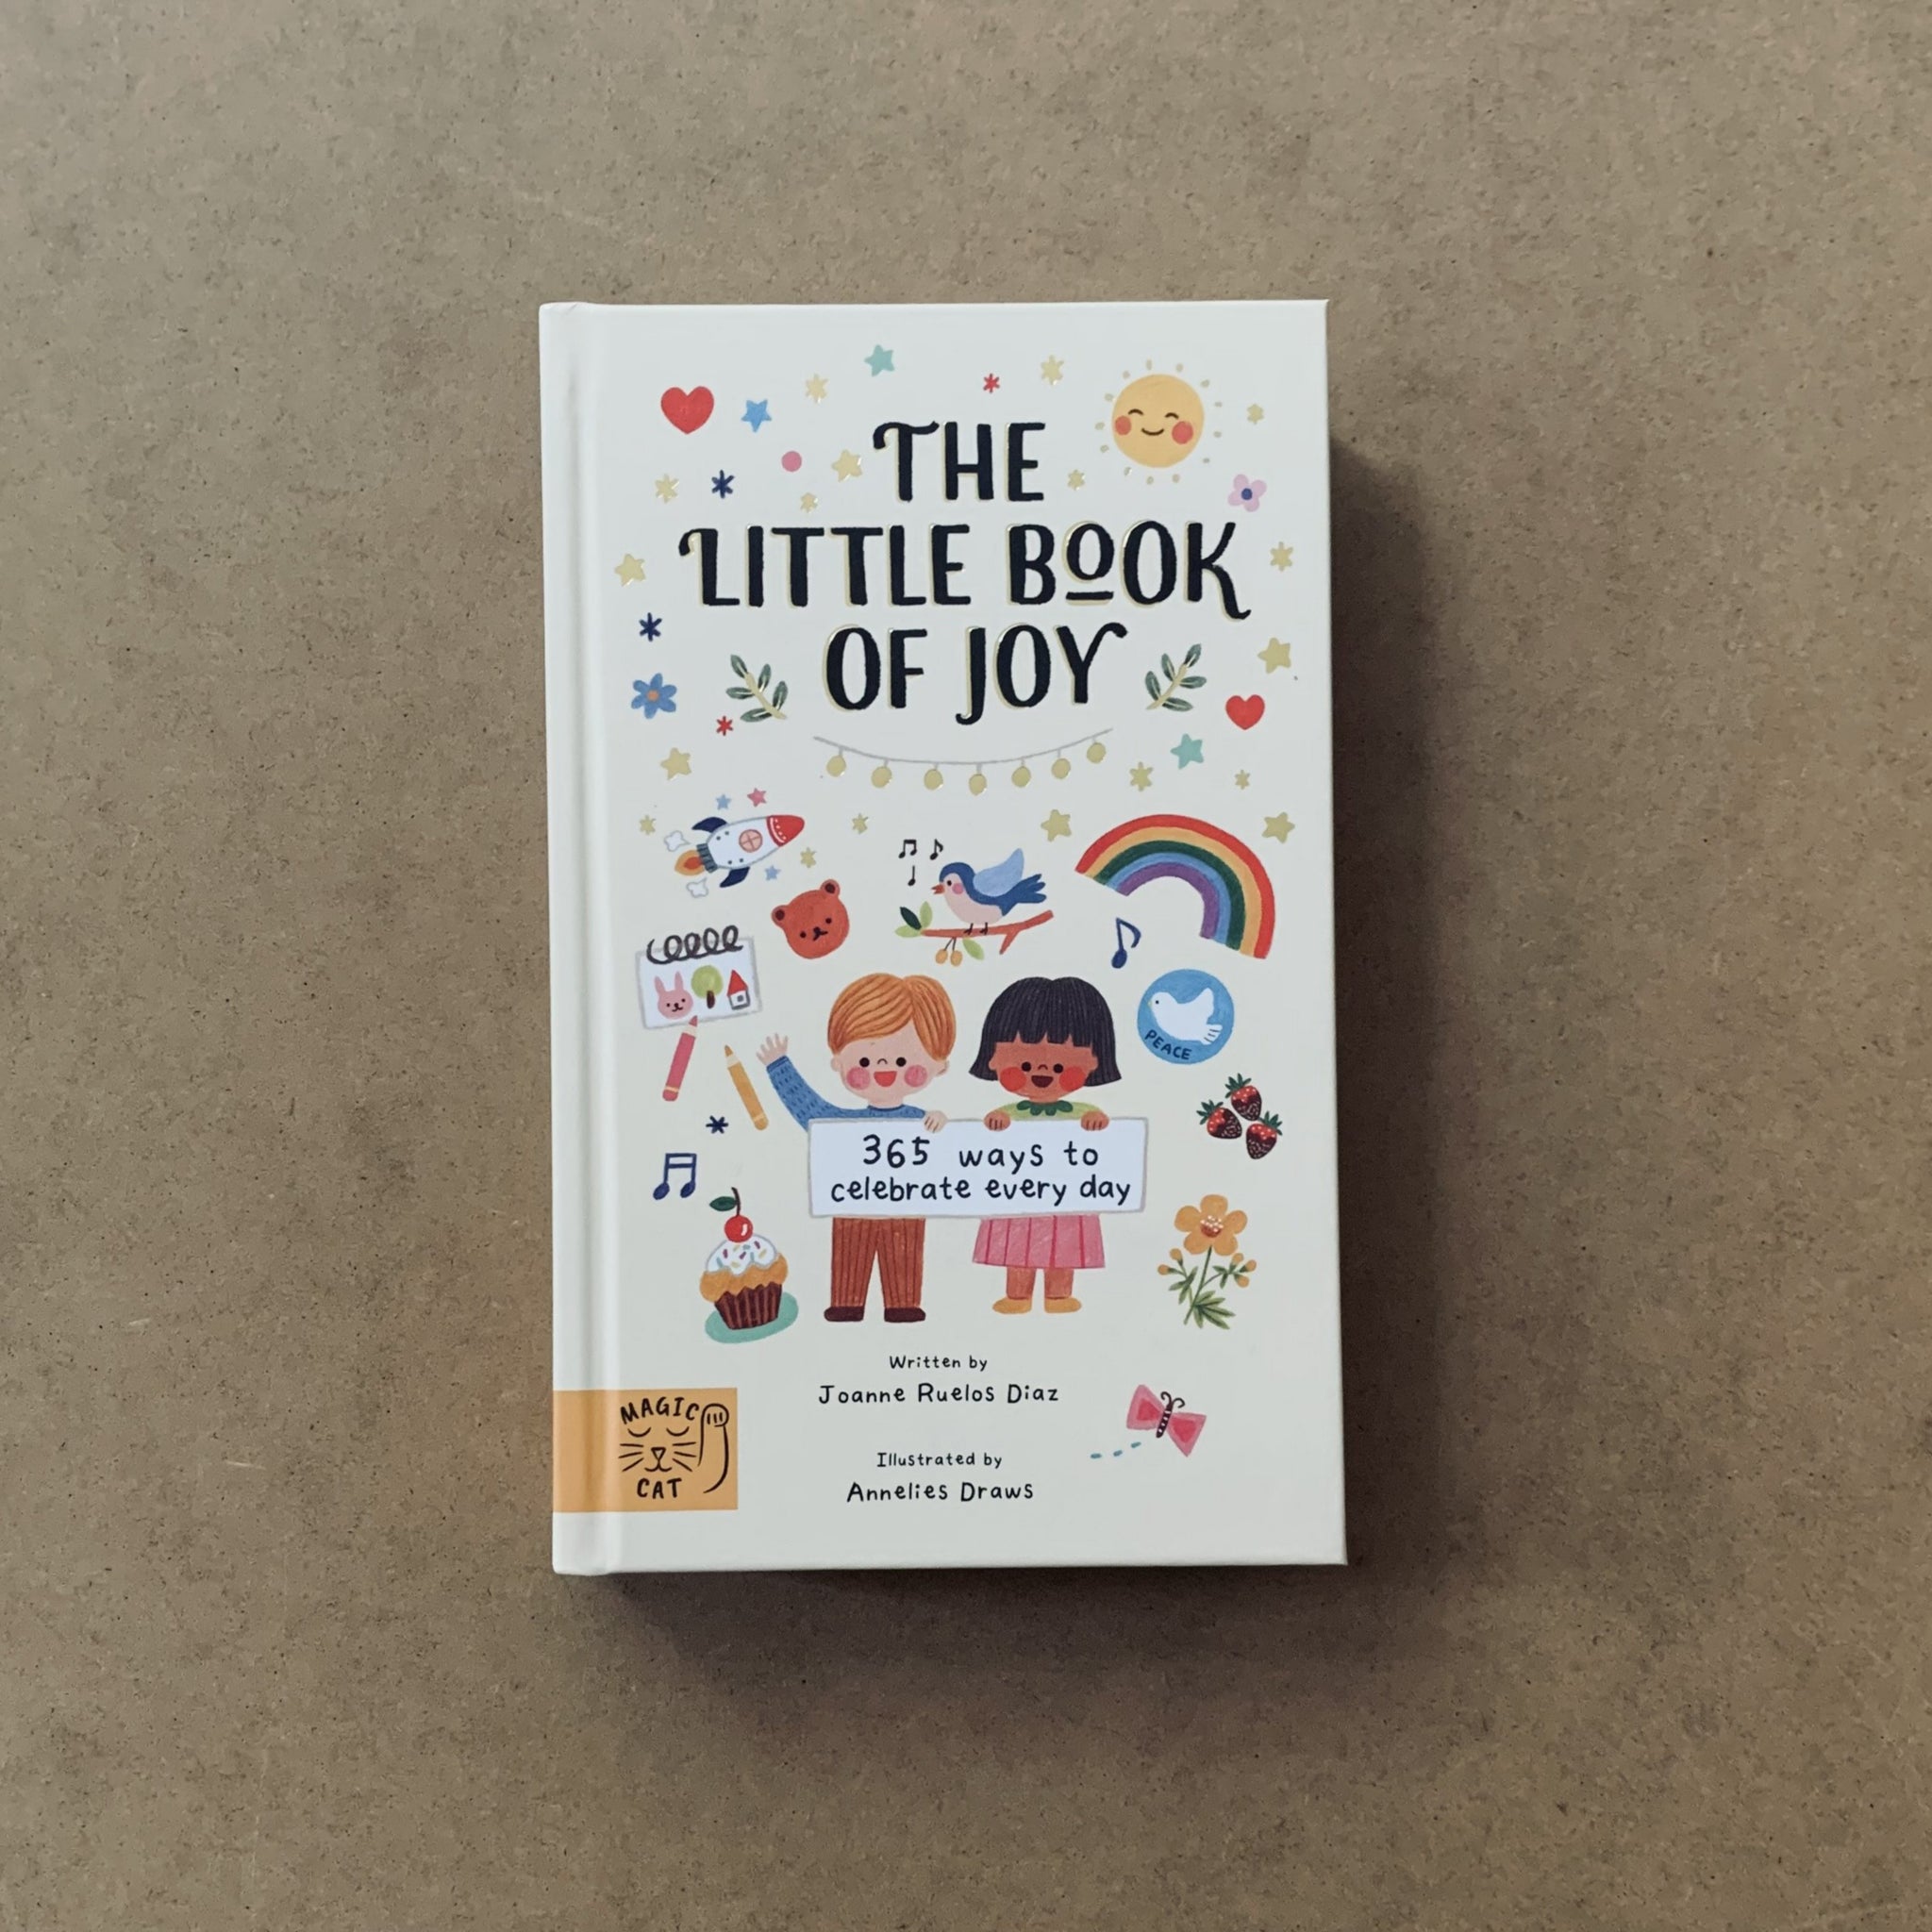 THE LITTLE BOOK OF JOY